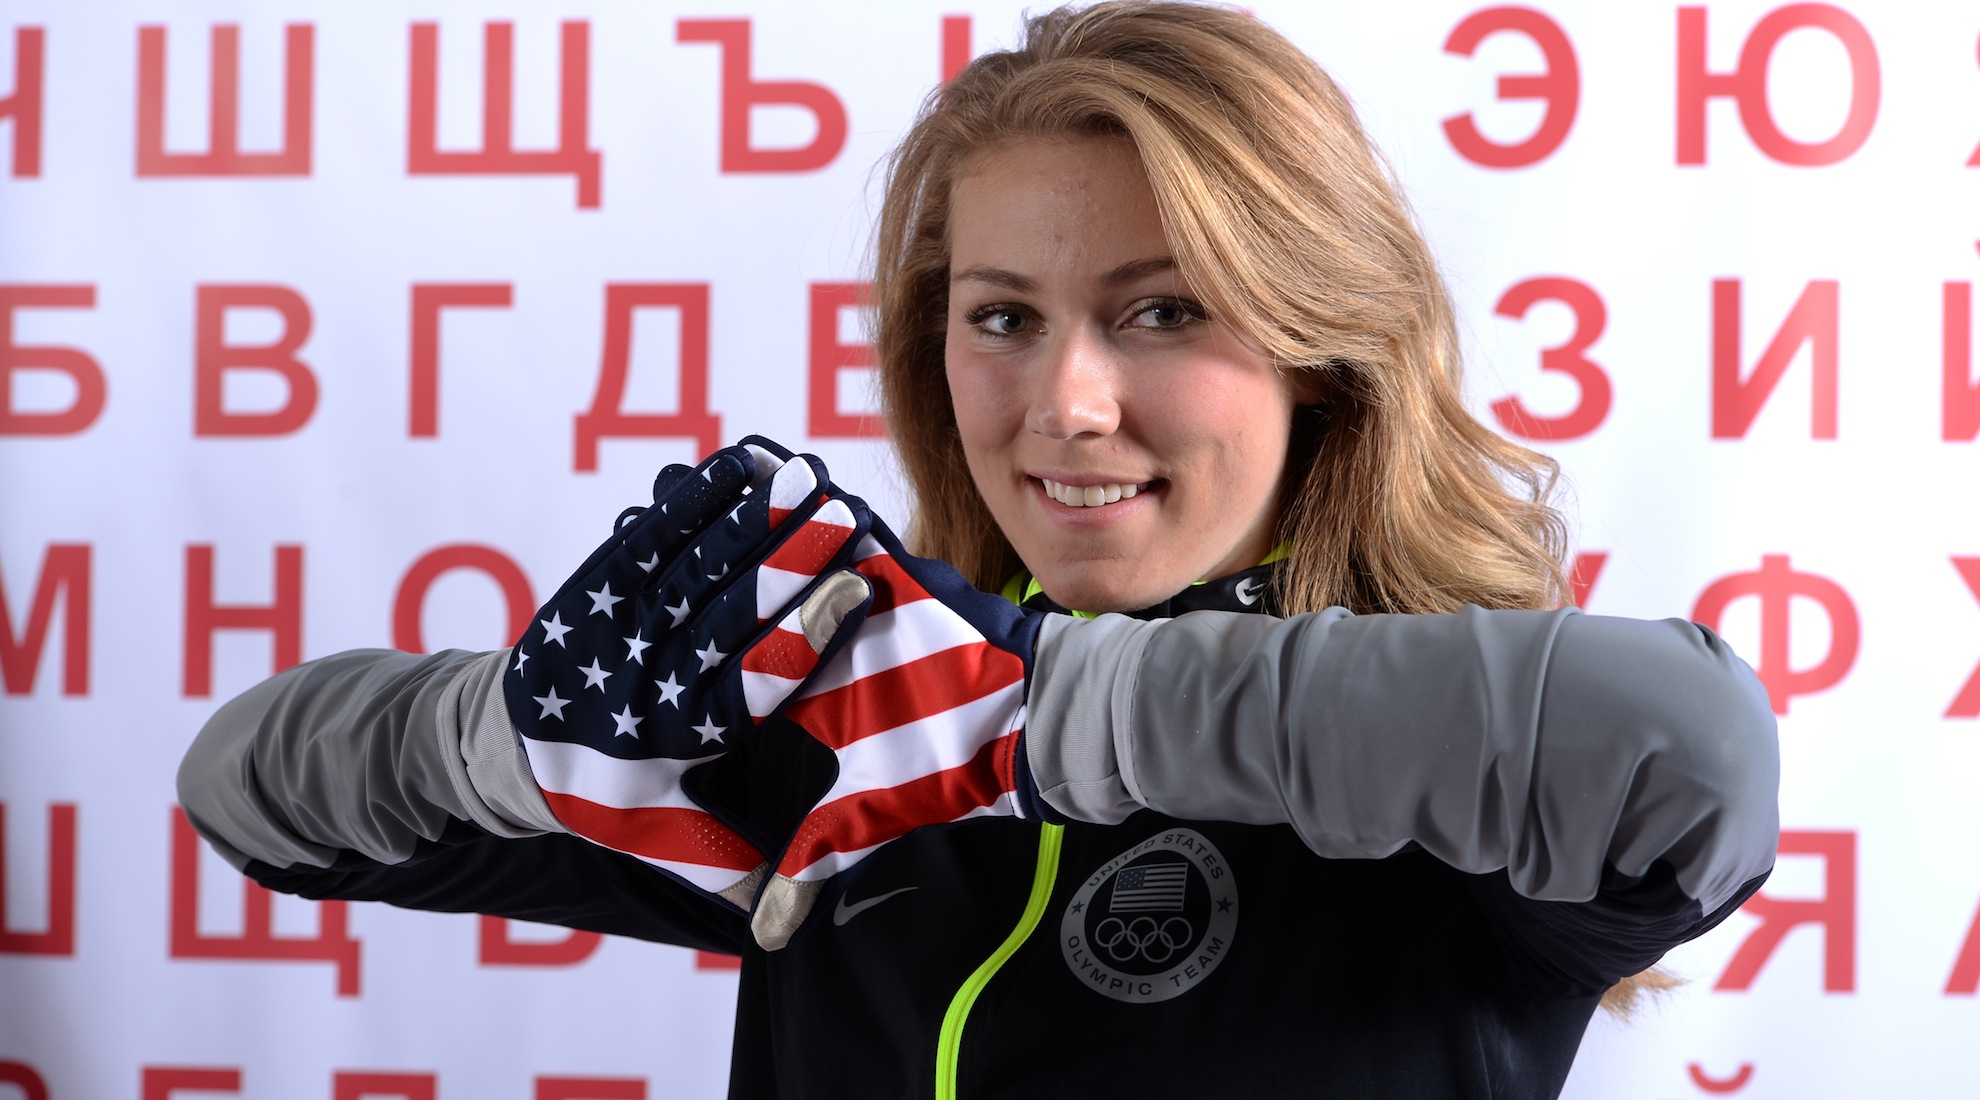 United States Skier: Mikaela Shiffrin